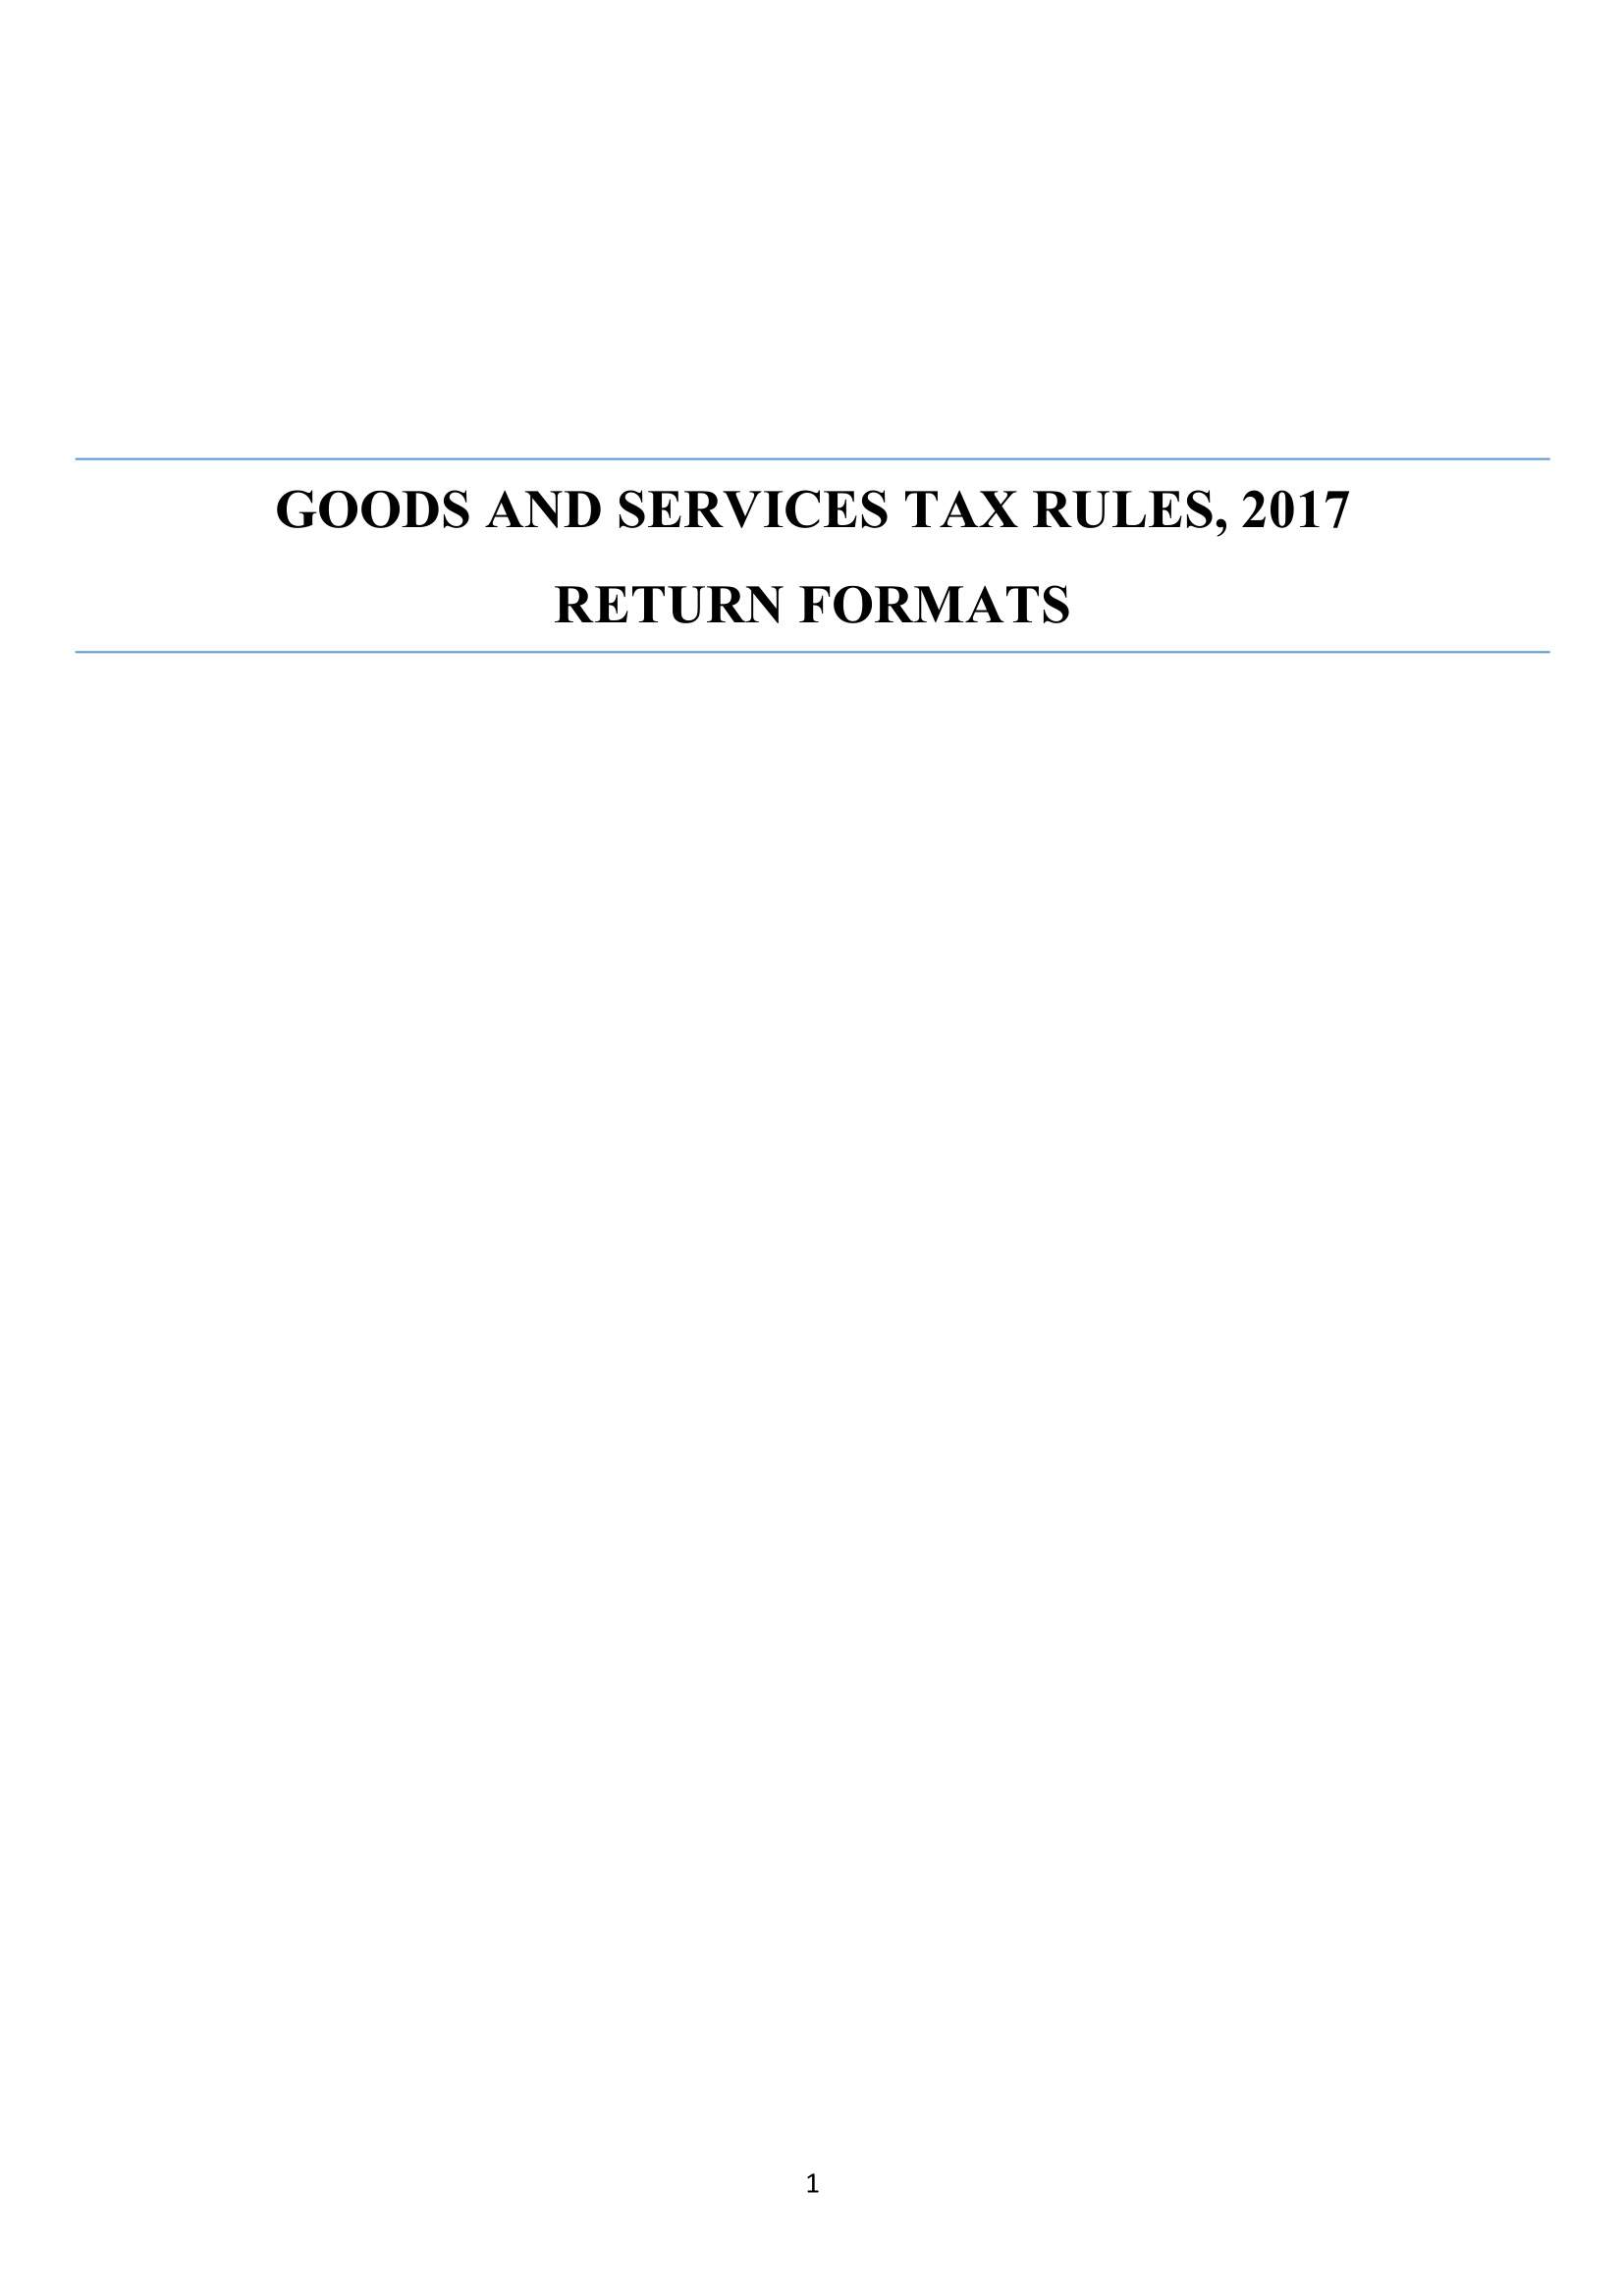 GST Return formats